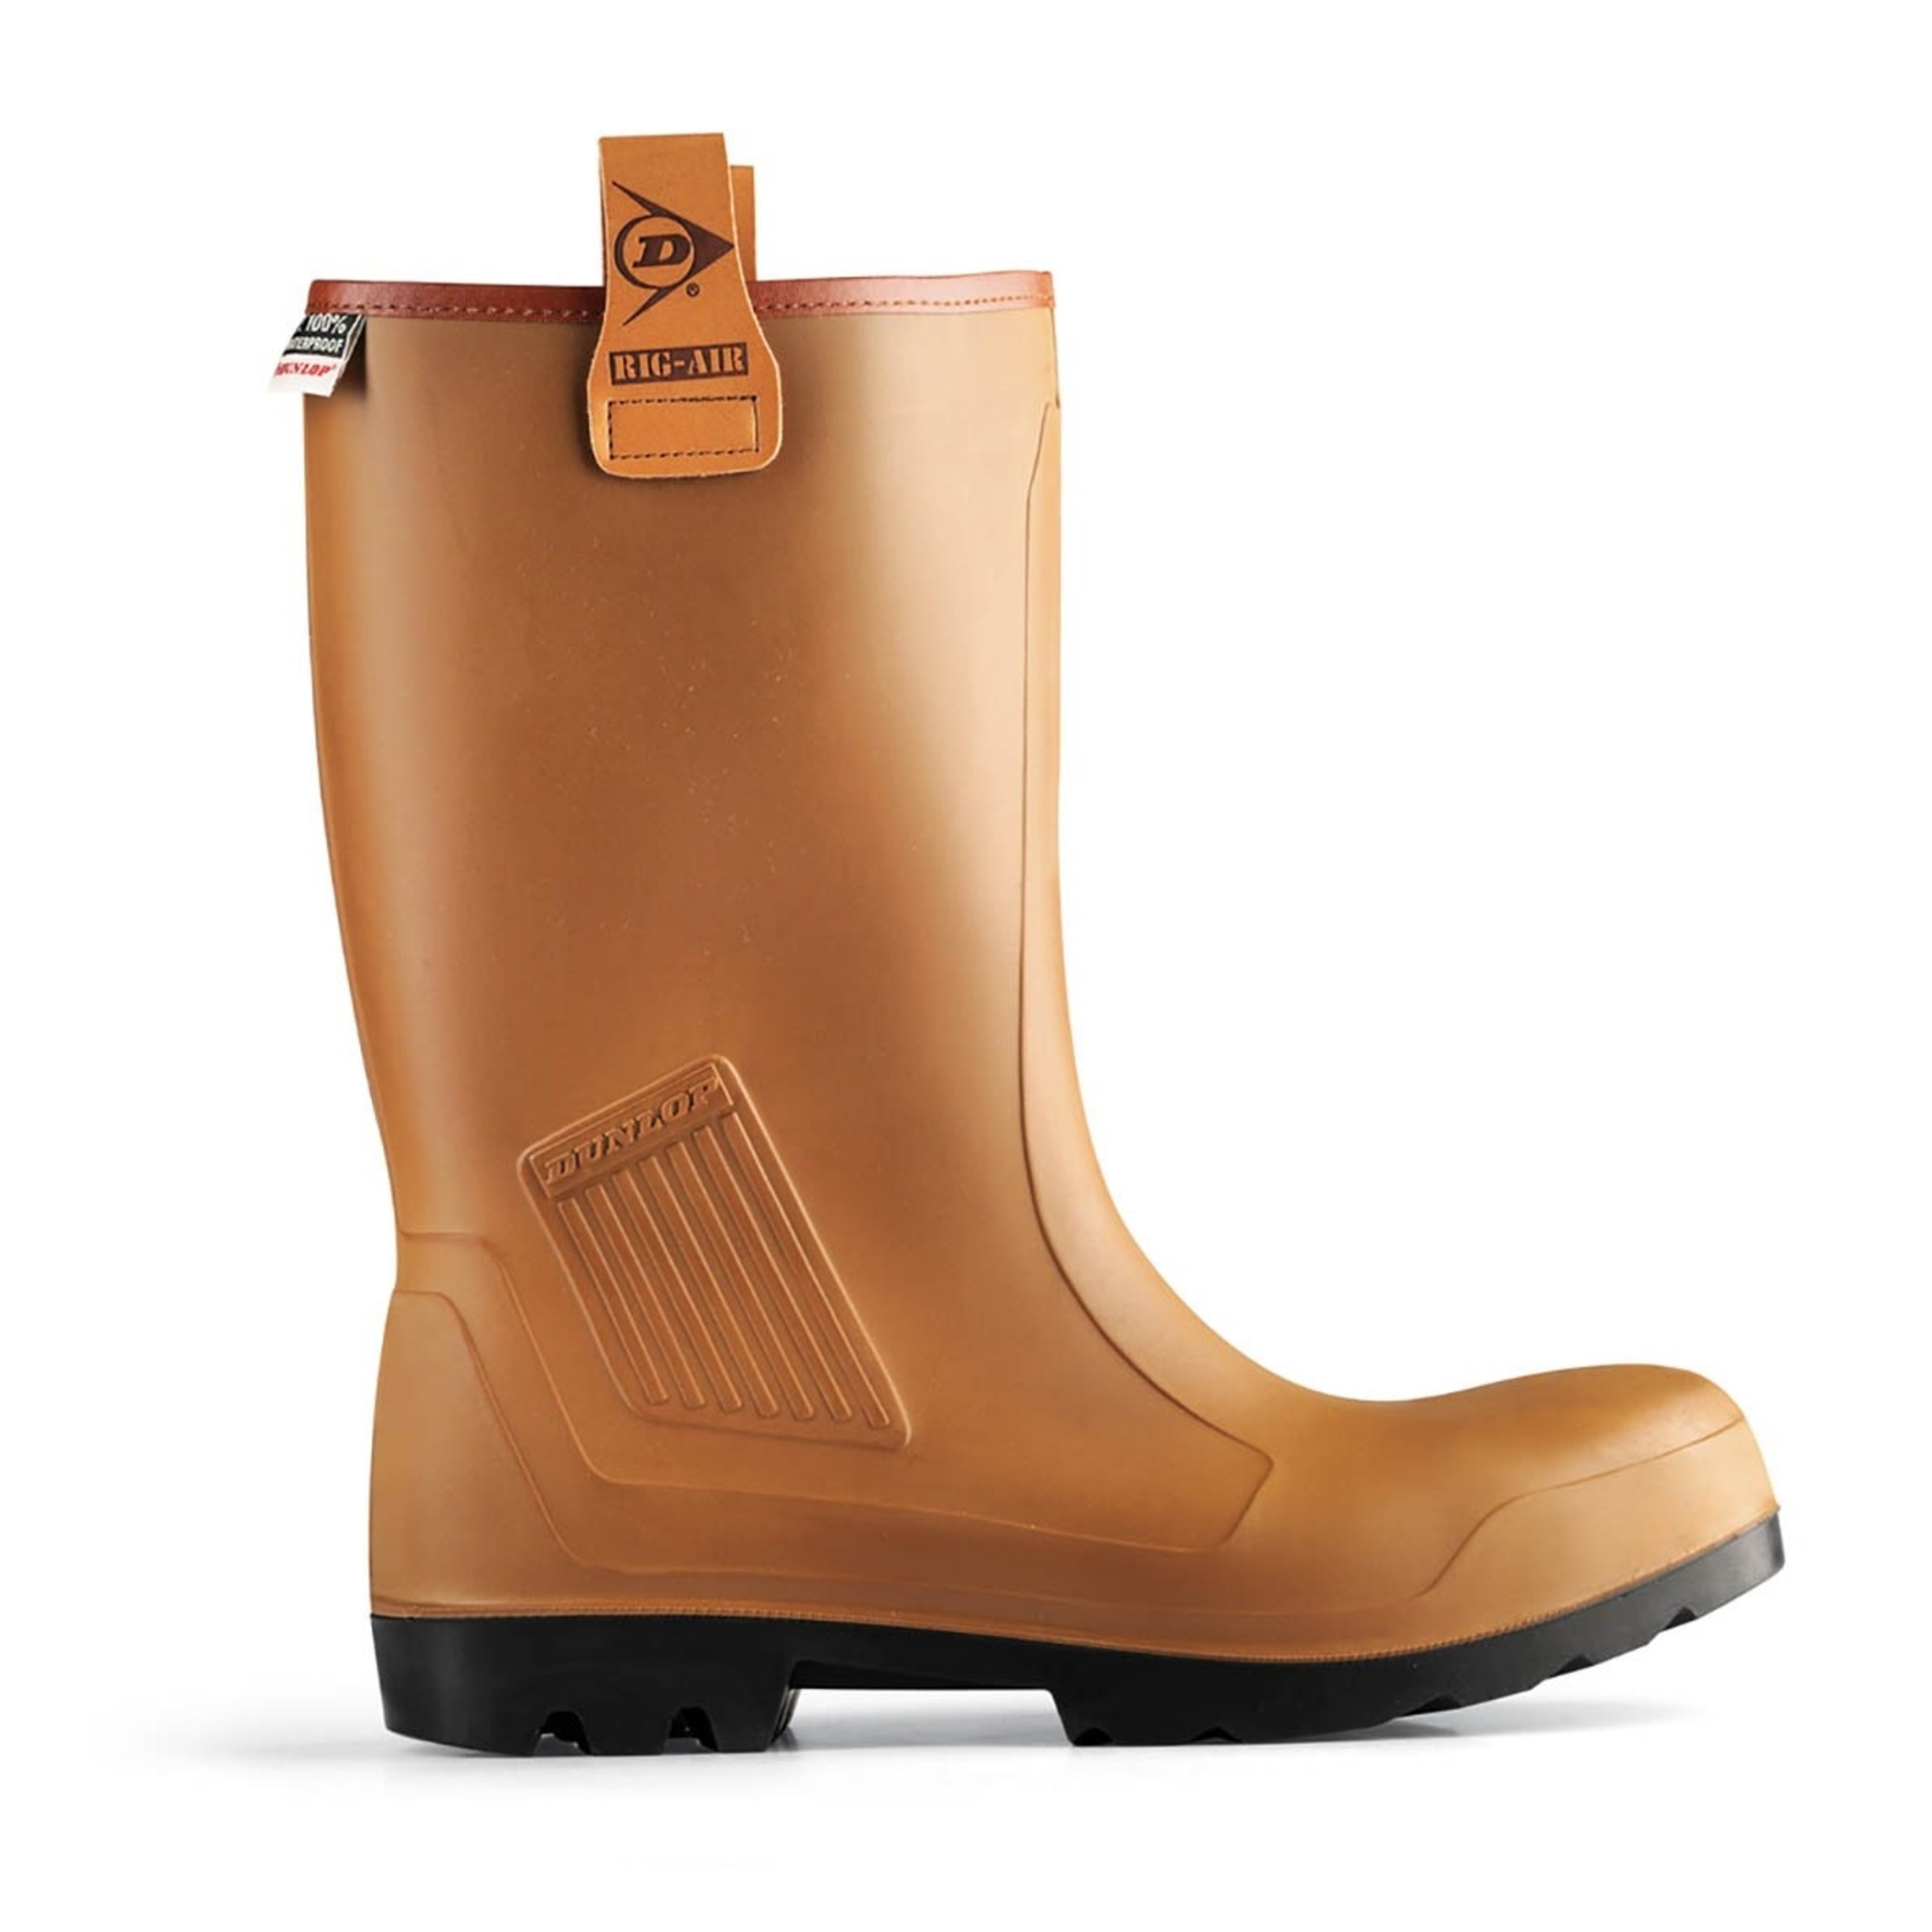 Rair Lined C462743fl / Mens Boots Dunlop (Brown) - marron - 